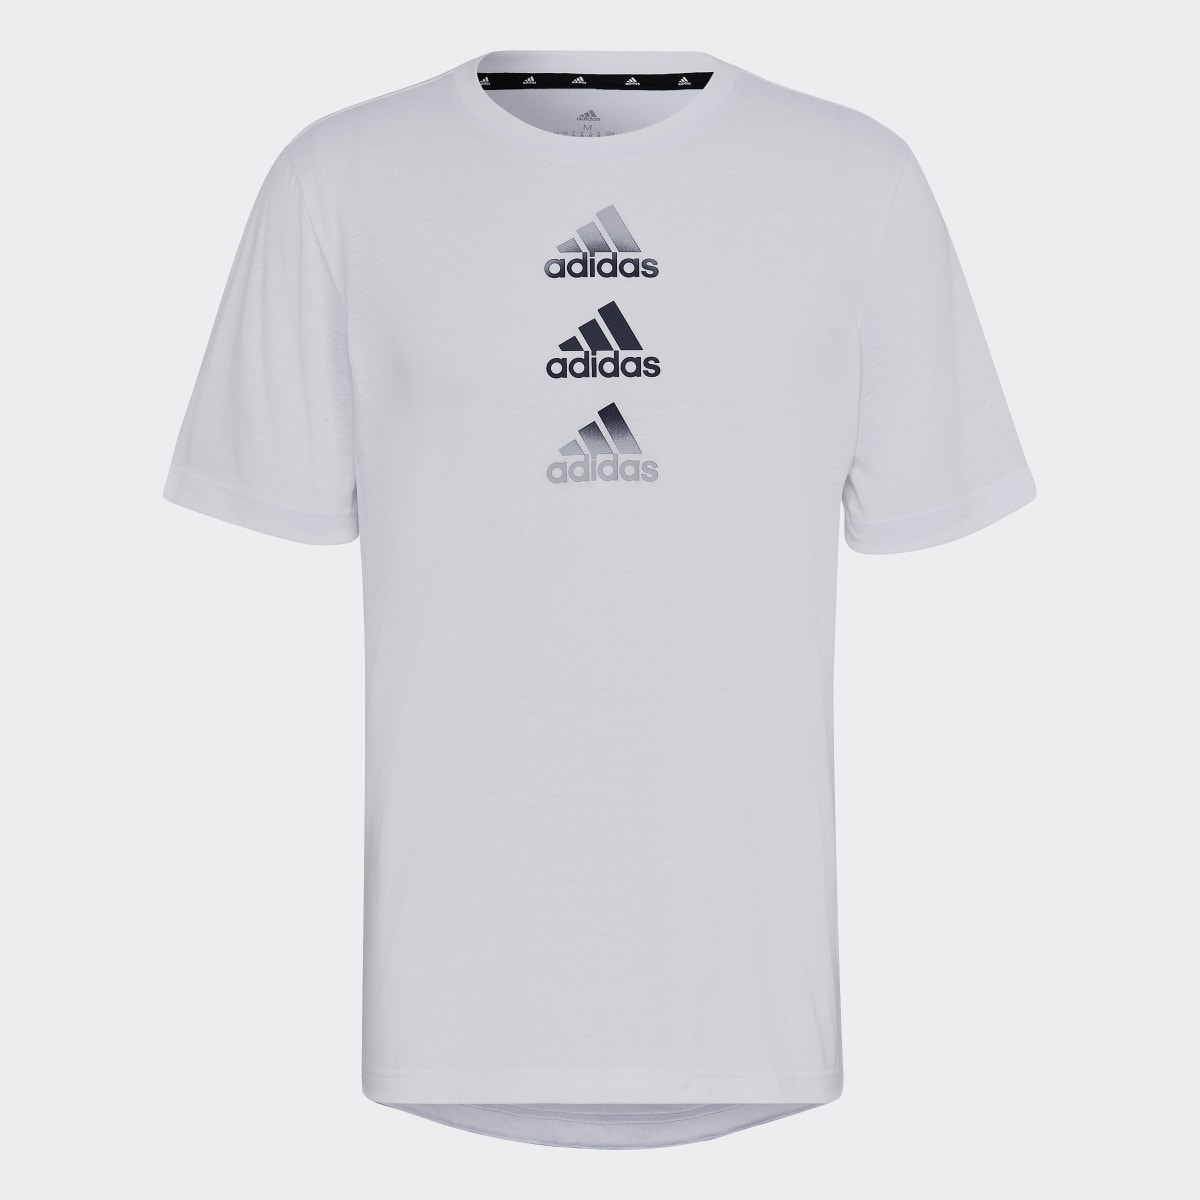 Adidas T-shirt Designed to Move. 5